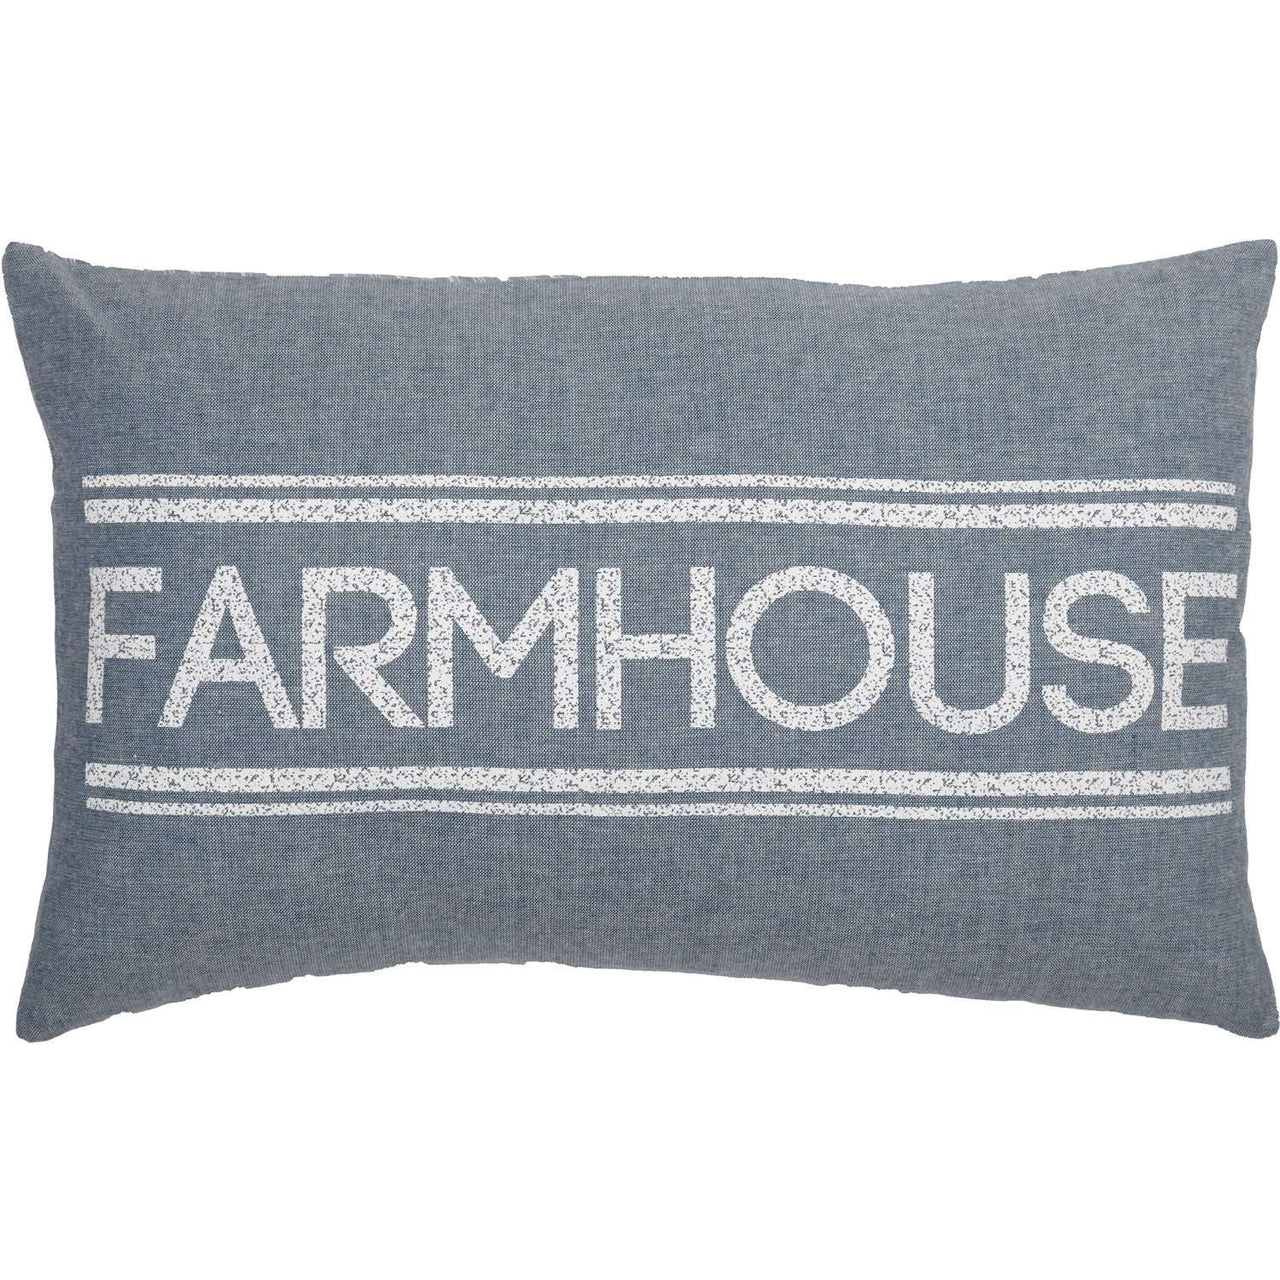 Sawyer Mill Farmhouse Pillow Charcoal, Red & Blue Pillows VHC Brands Blue 